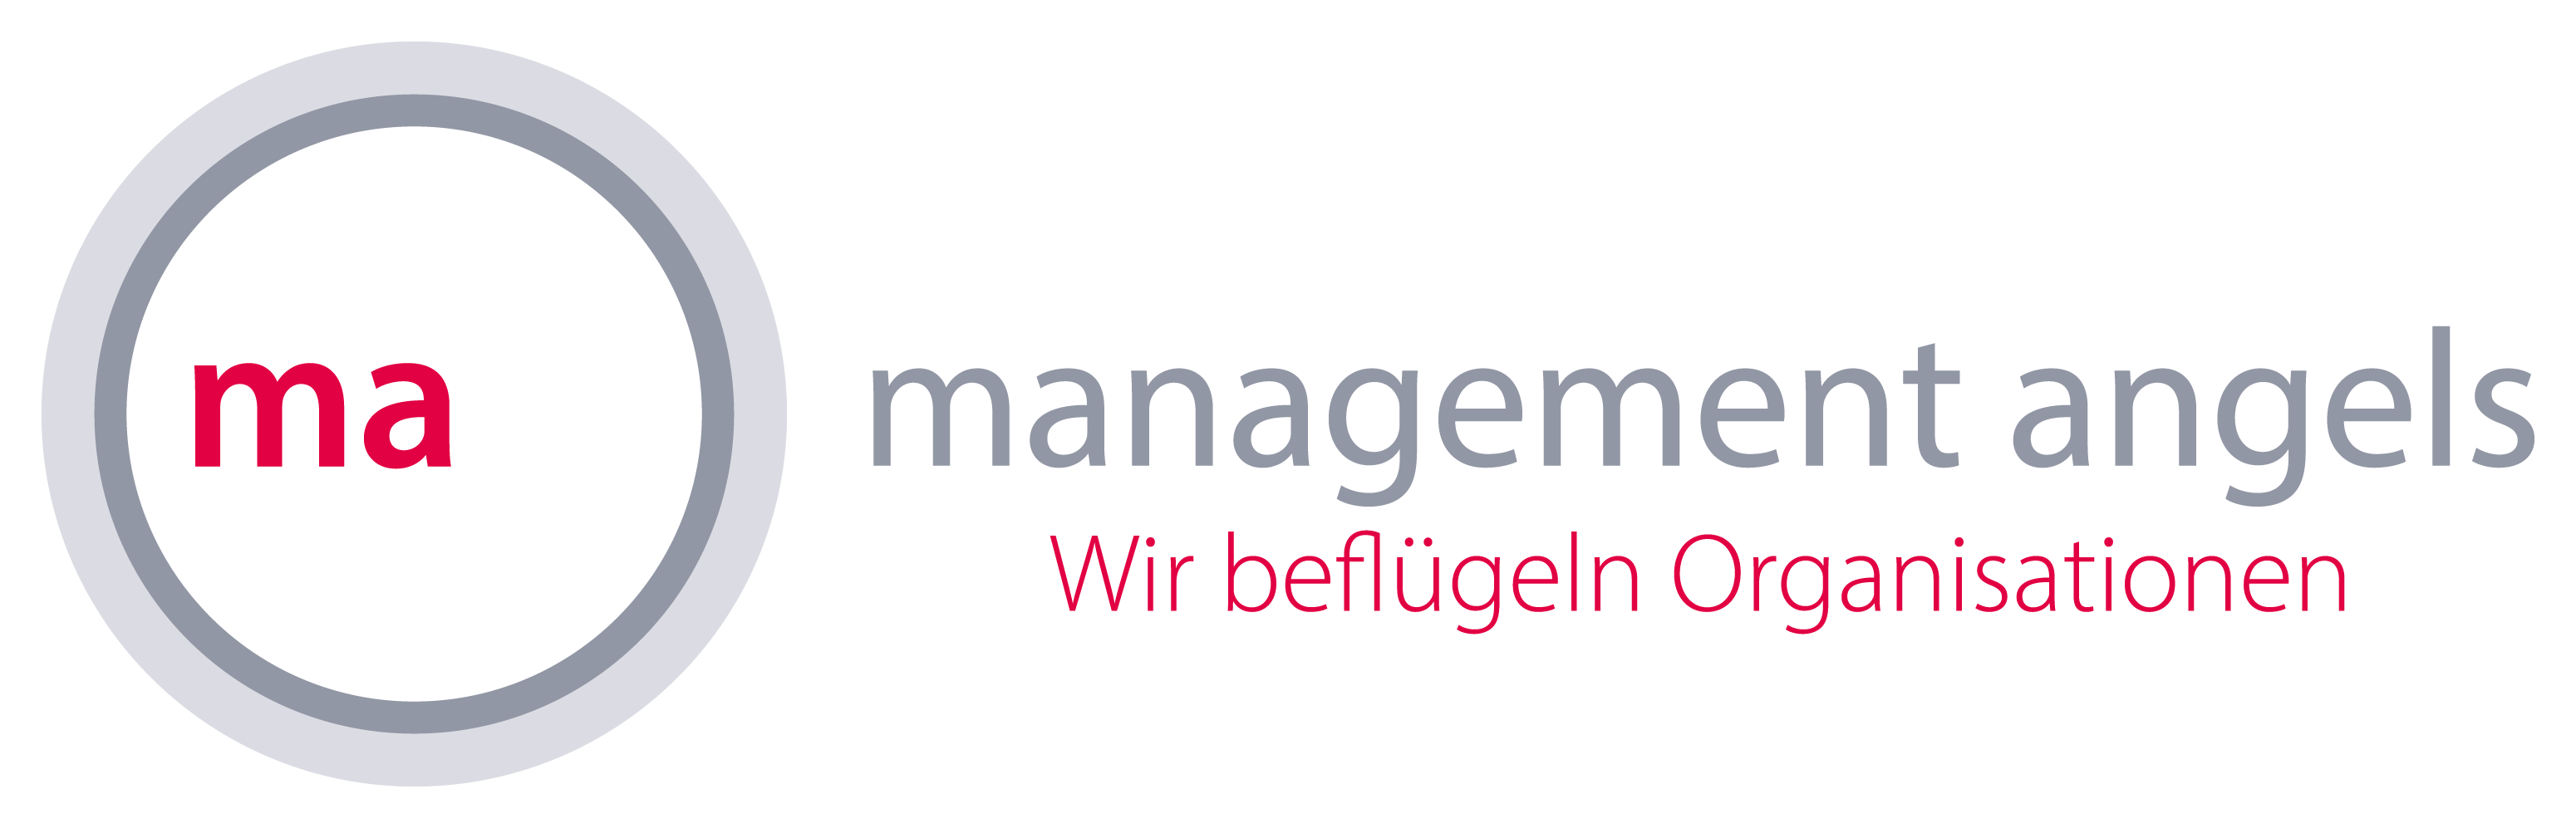 Logo image for Germany